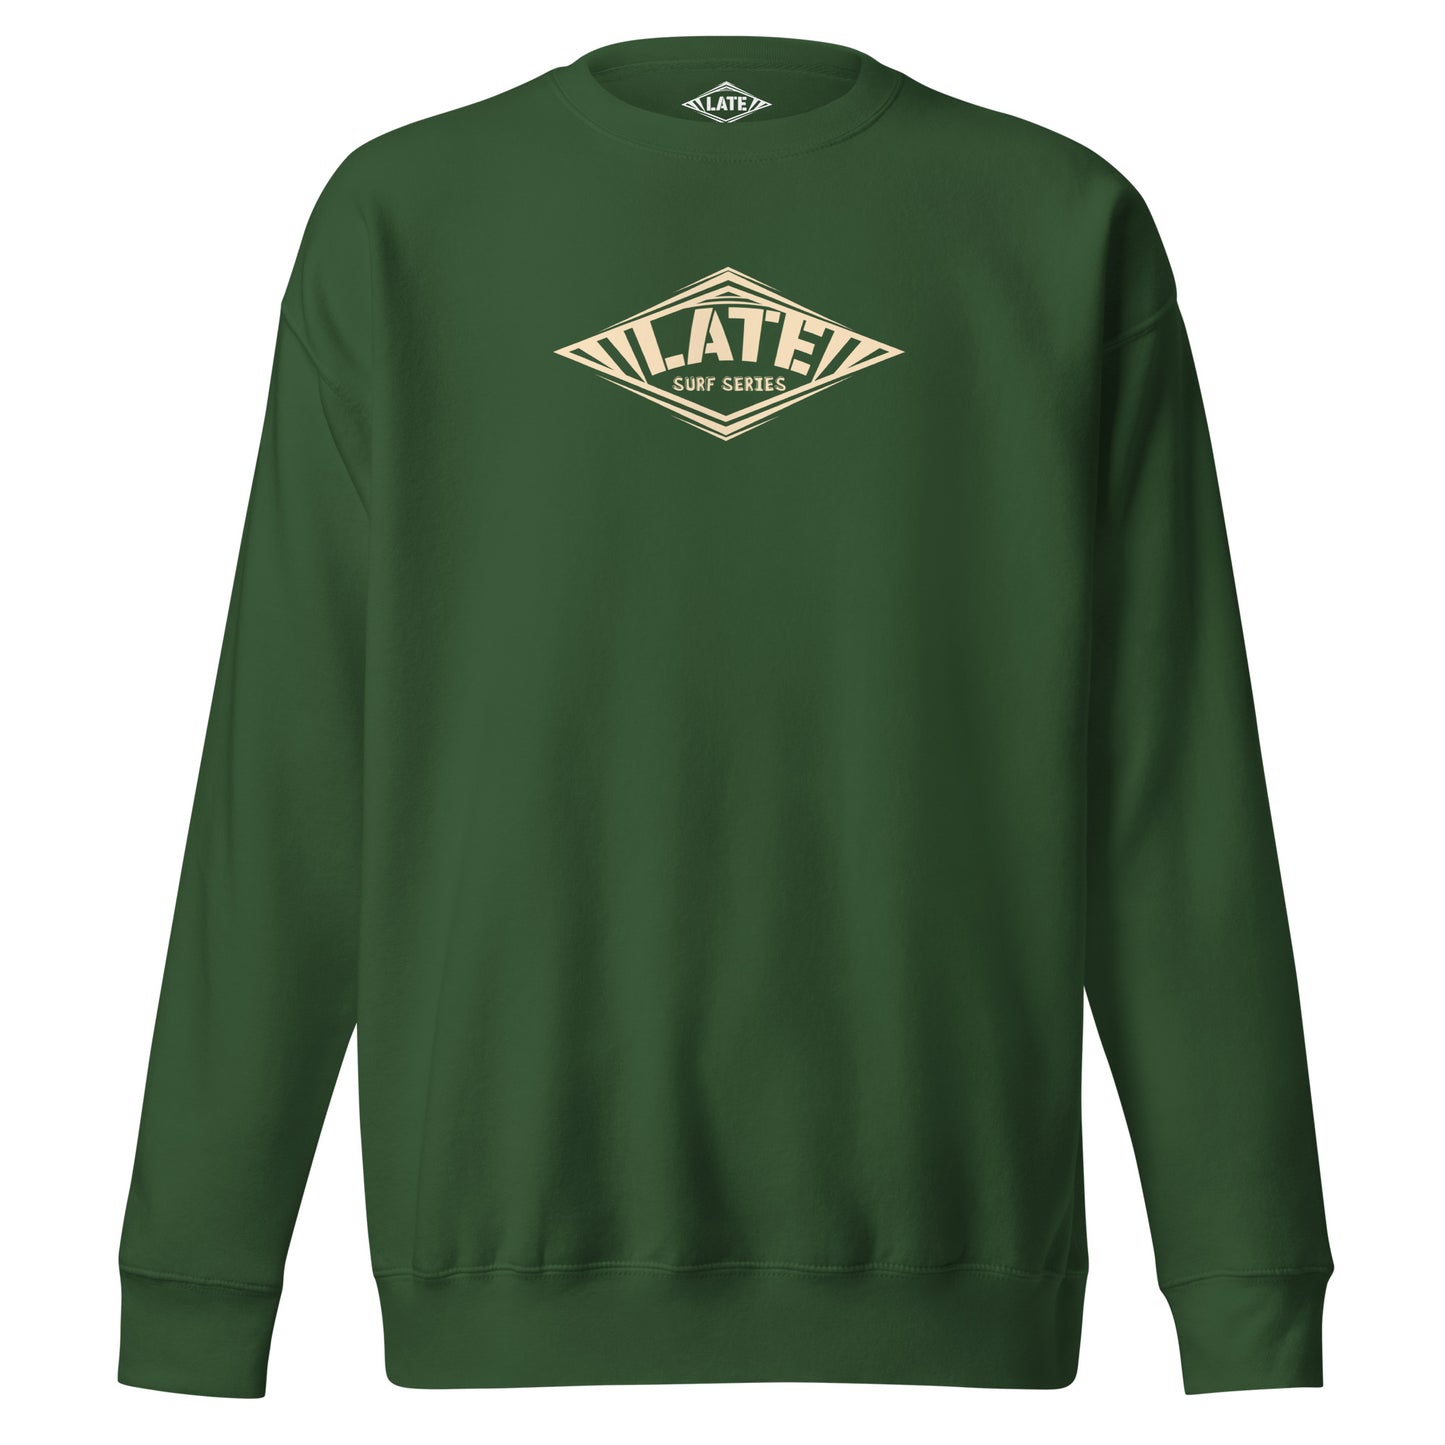 Sweatshirt Take On The Elements surf series logo Late sweat unisex vert